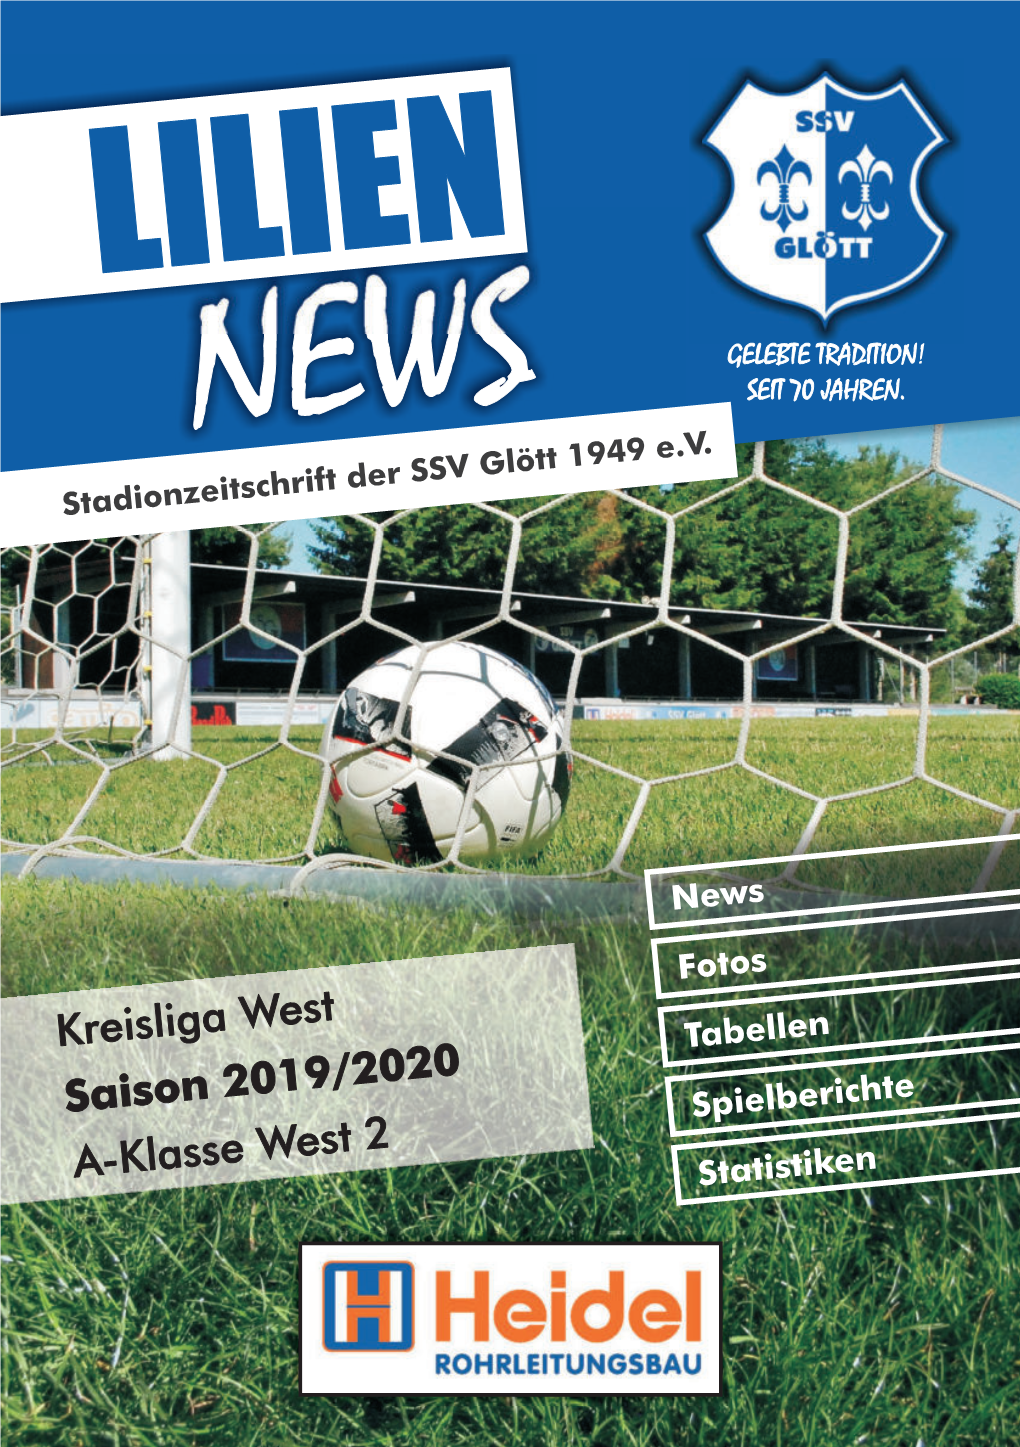 A-Klasse West 2 Kreisliga West Saison 2019/2020